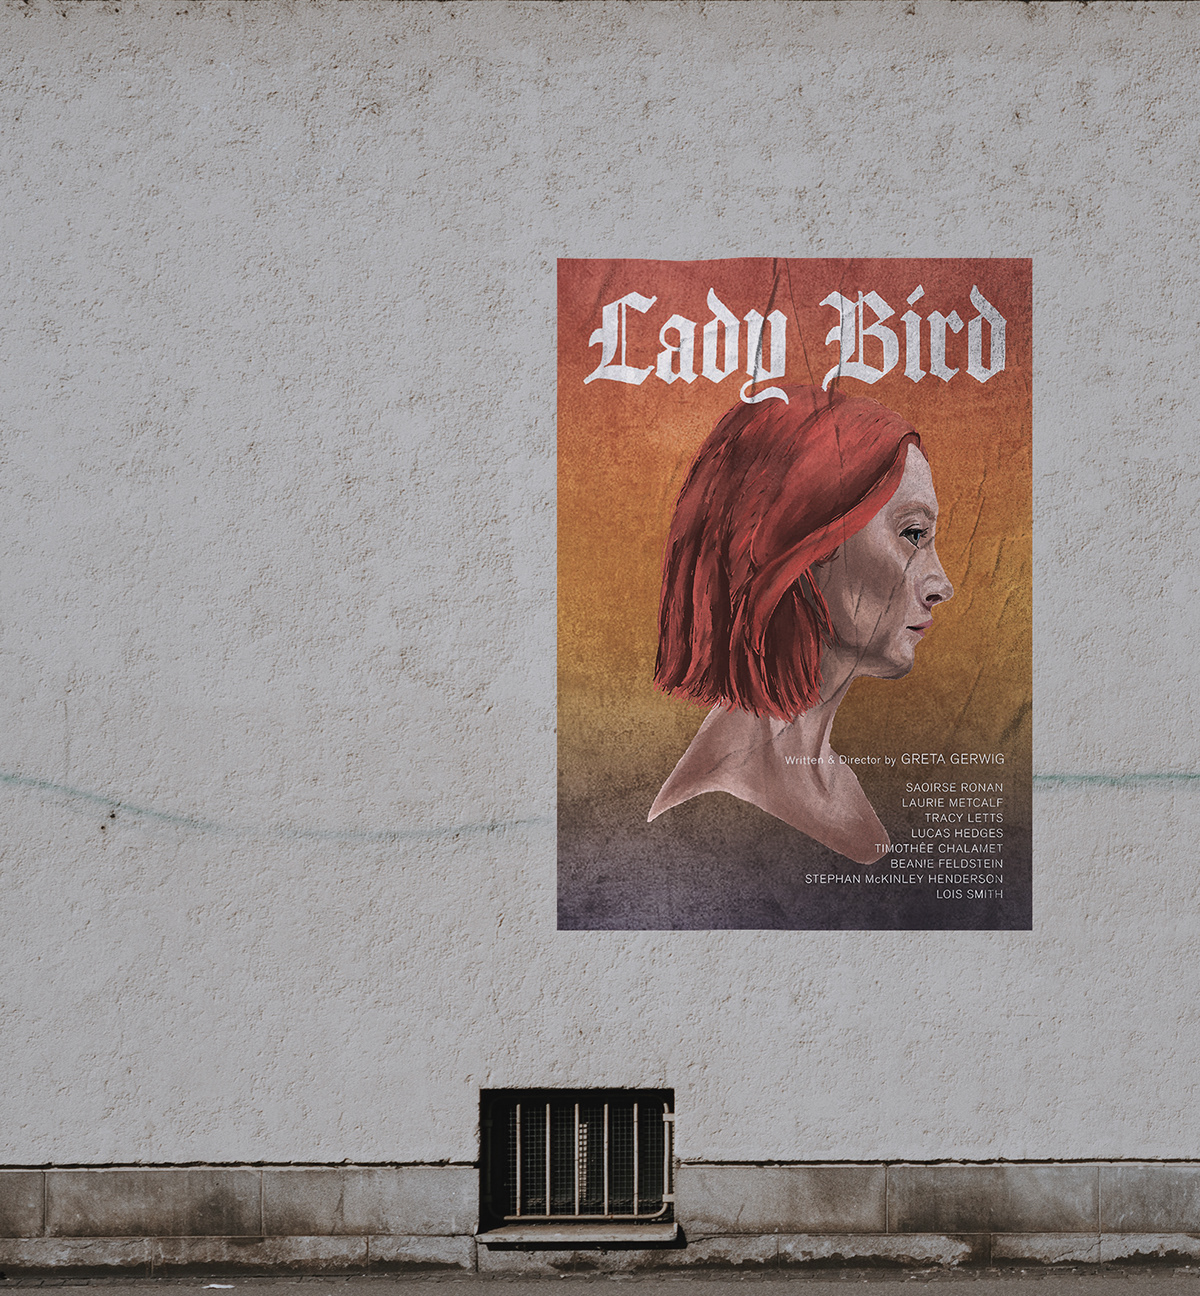 Fan Art Greta Gerwig ILLUSTRATION  lady bird movie poster saoirse ronan Digital Art 